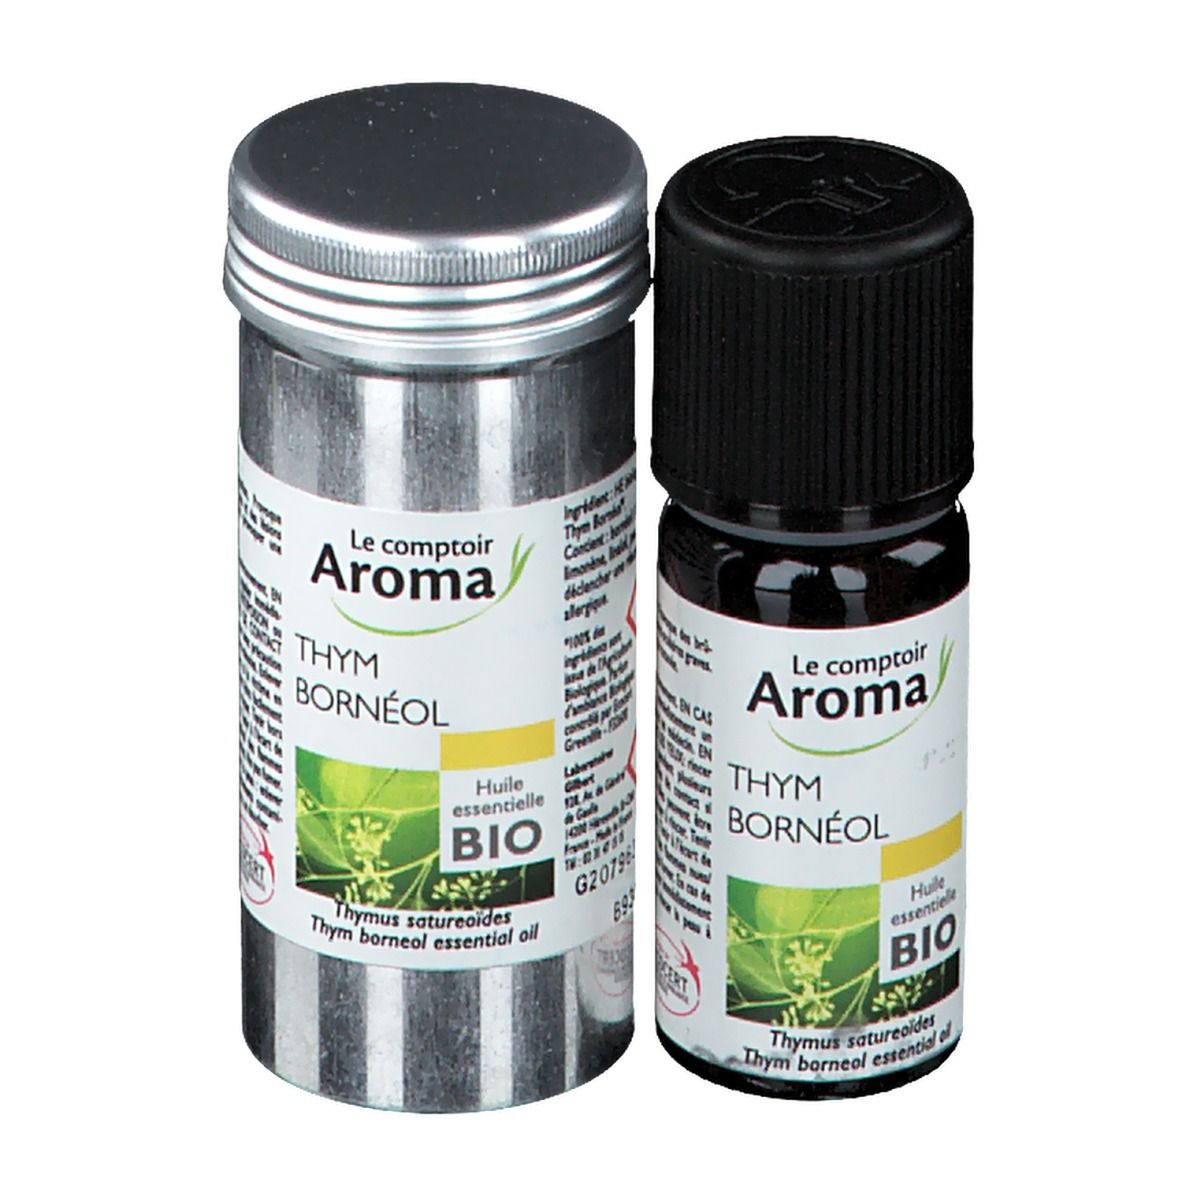 Le Comptoir Aroma huile essentielle Thym bornéol